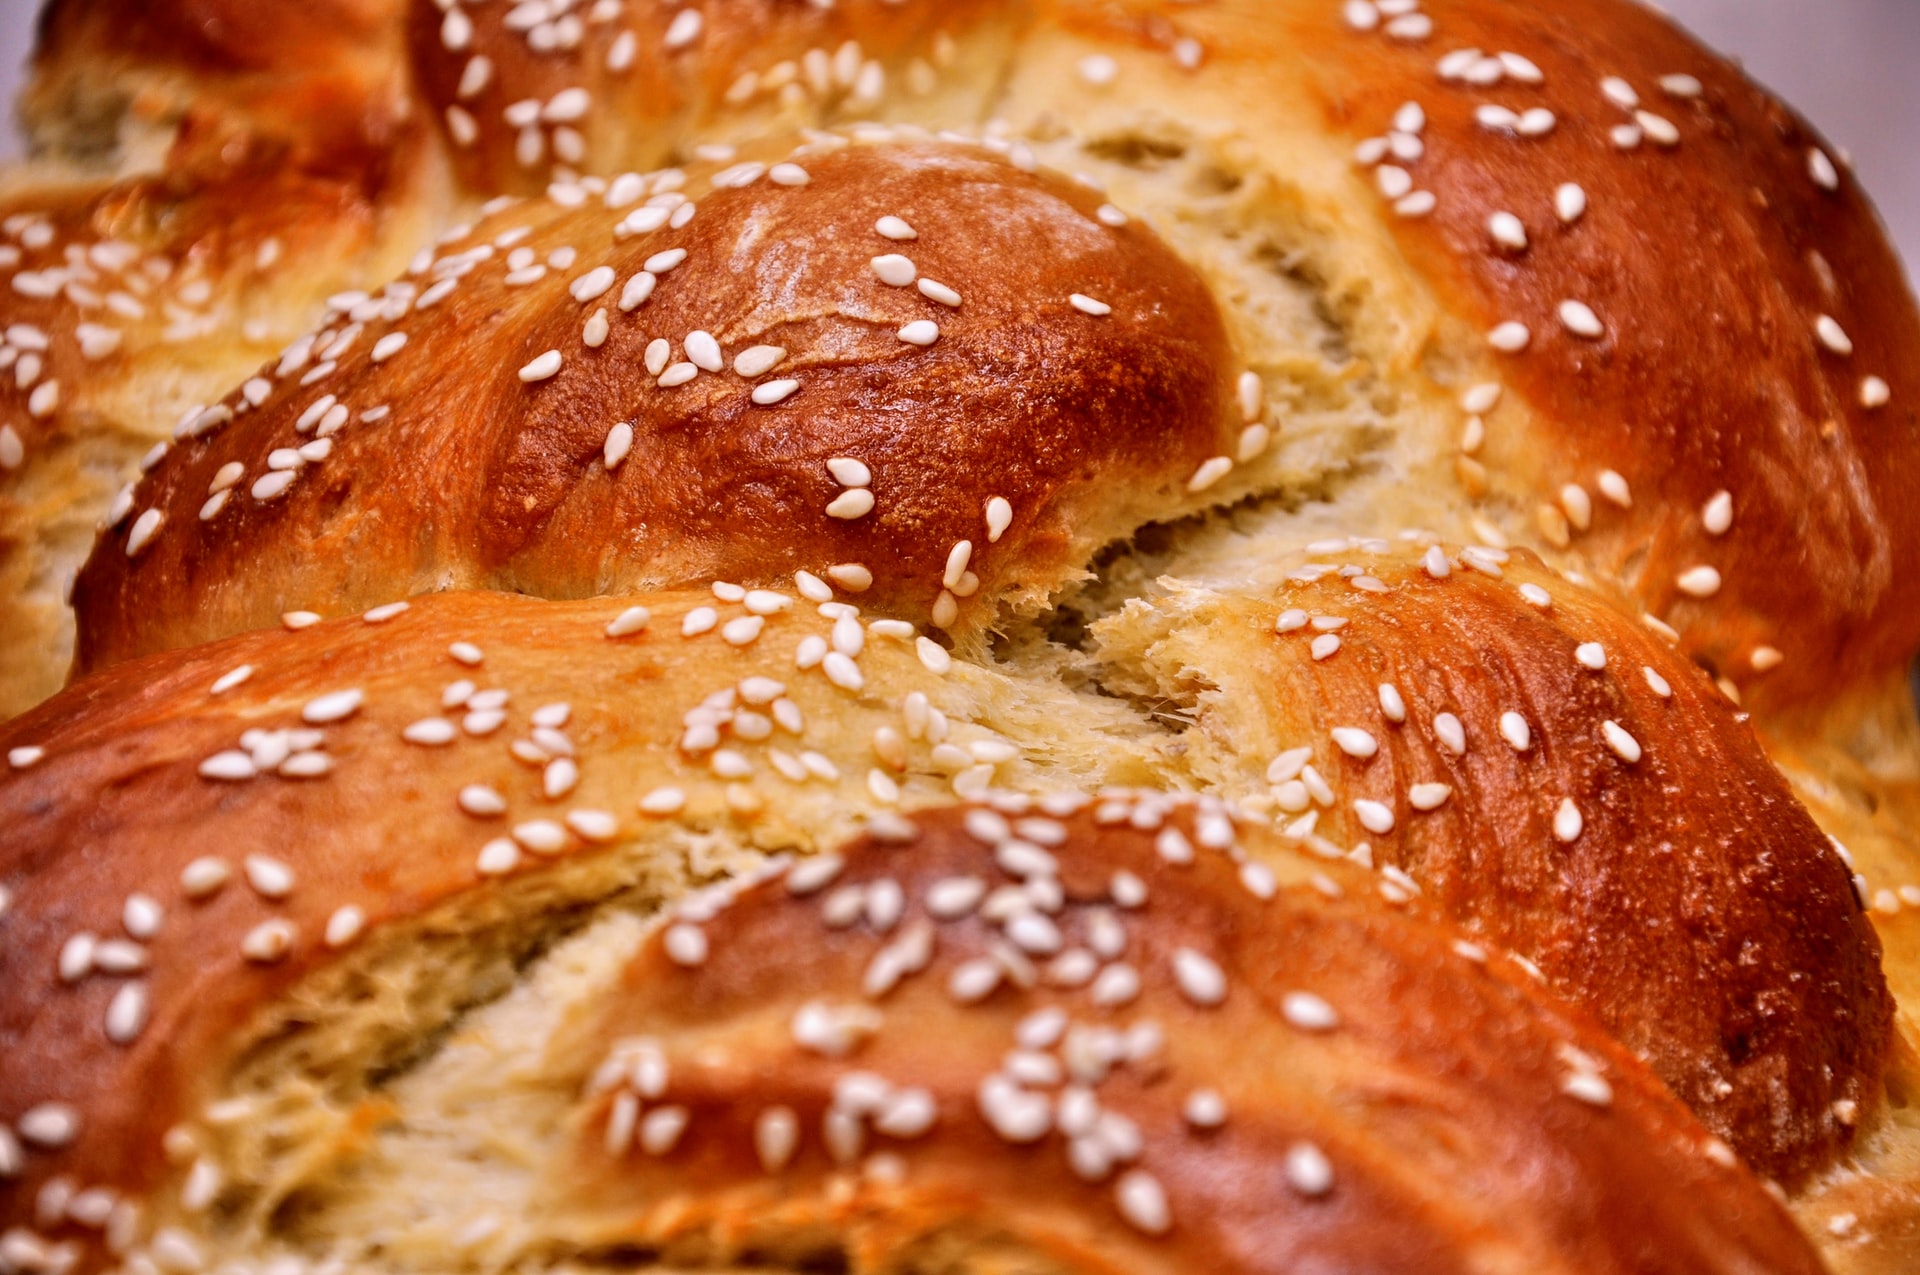 Freshly baked (challah) bread